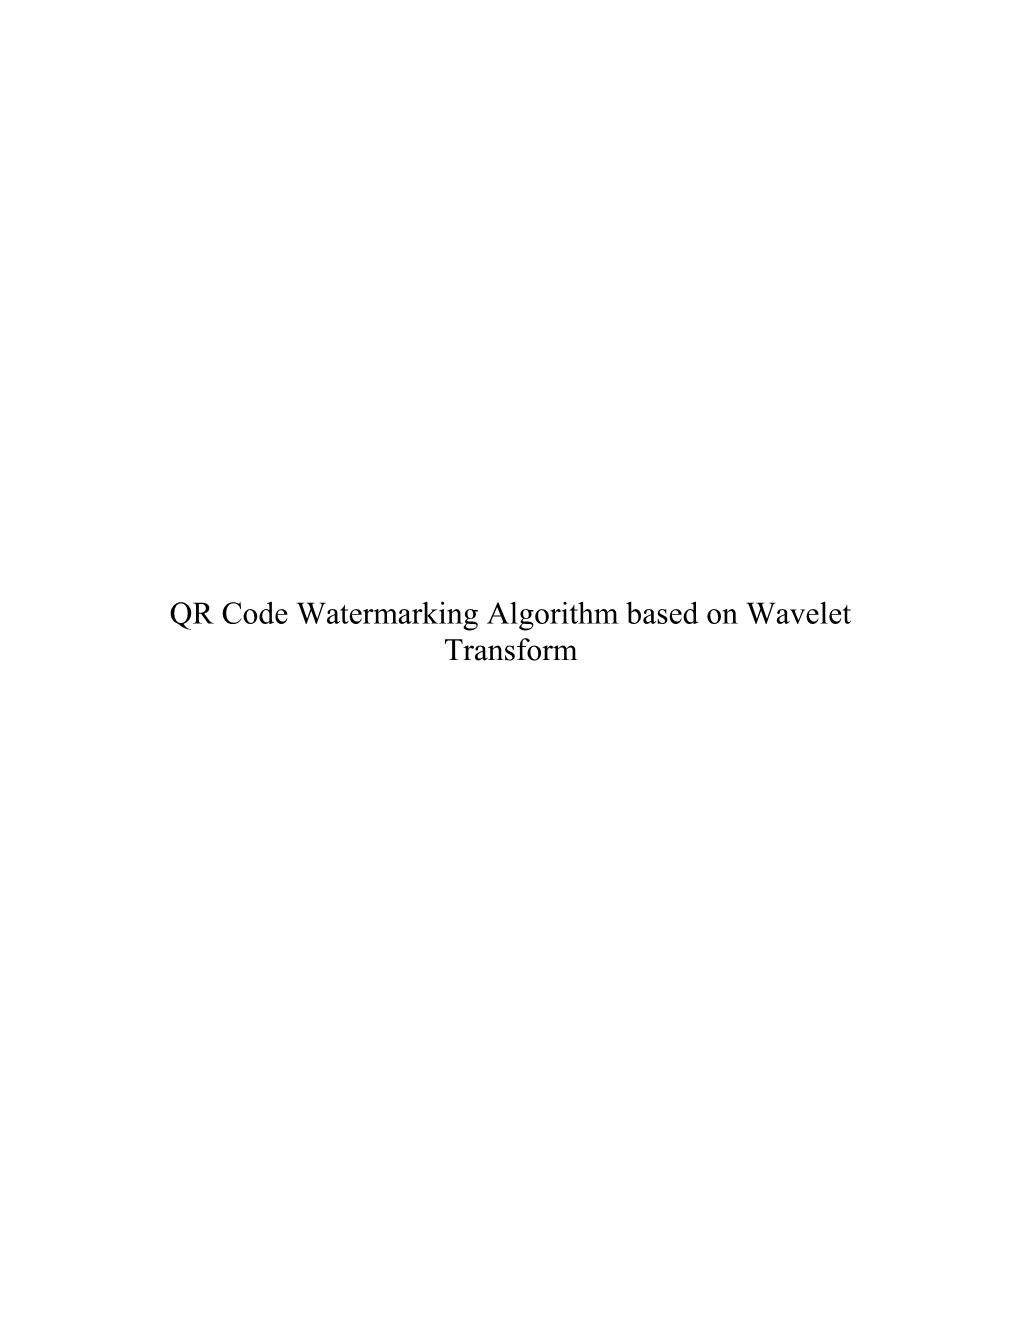 QR Code Watermarking Algorithm Based on Wavelet